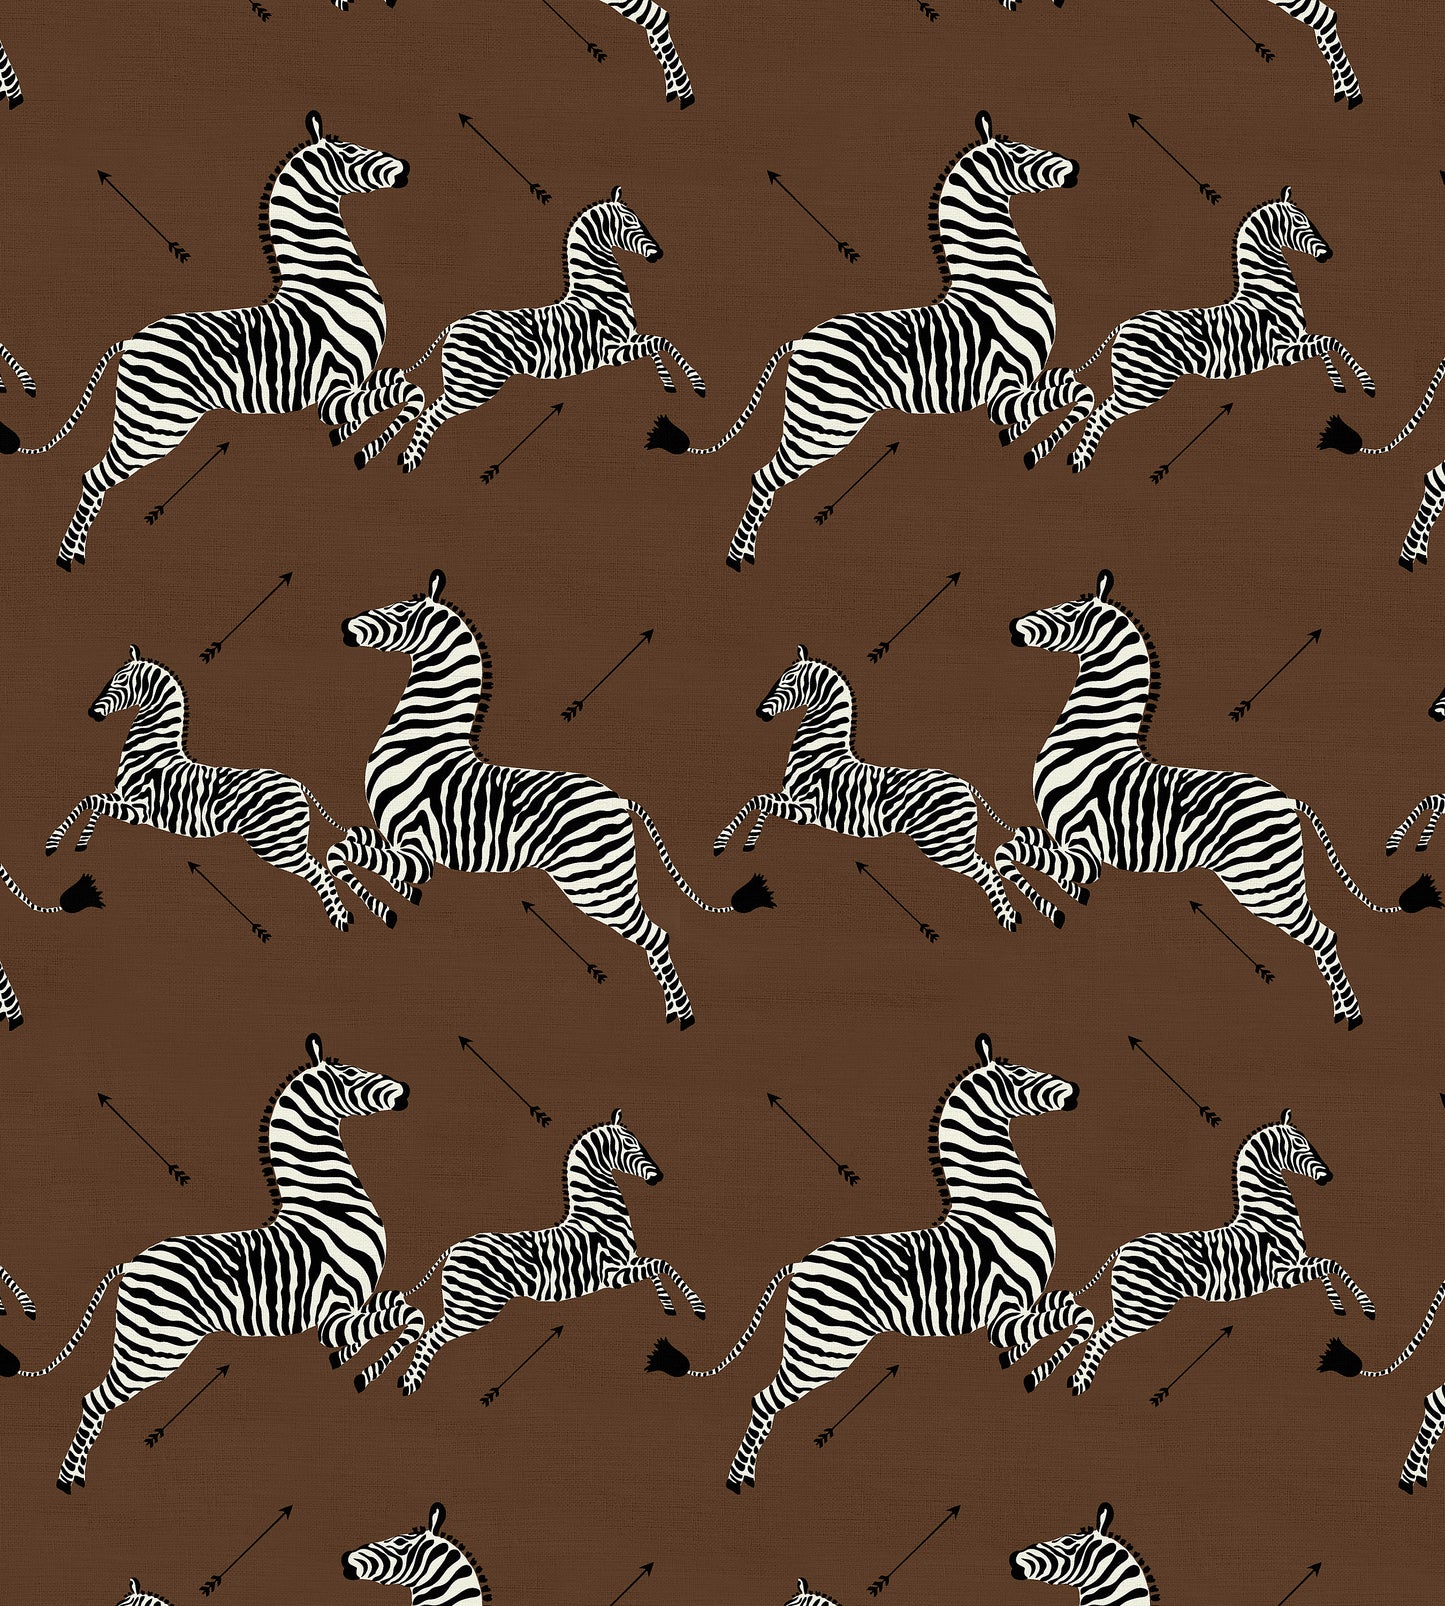 Purchase Scalamandre Fabric Pattern# SC 000316496M, Zebras - Fabric Safari Brown 3